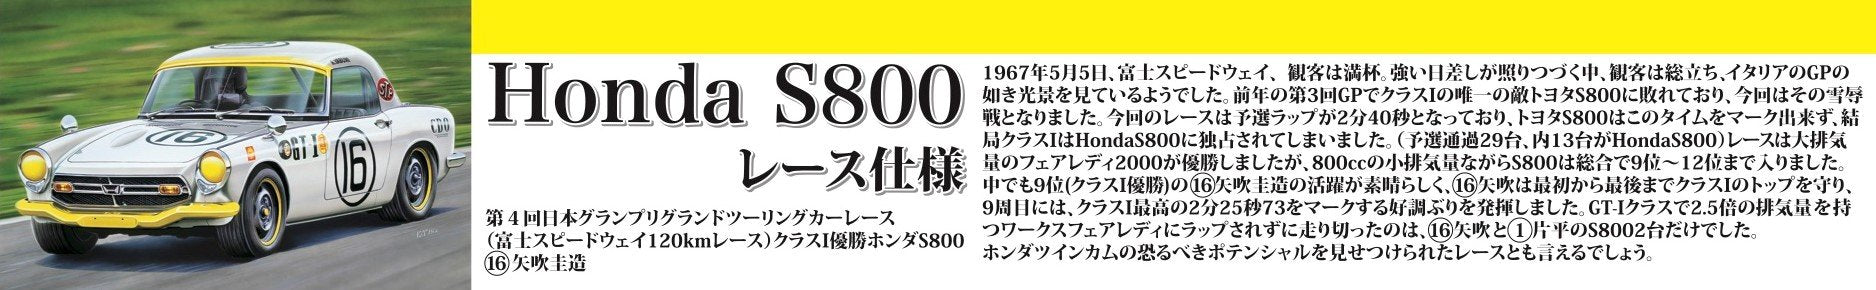 FUJIMI Id-253 Honda S800 Race Version Kit échelle 1/24